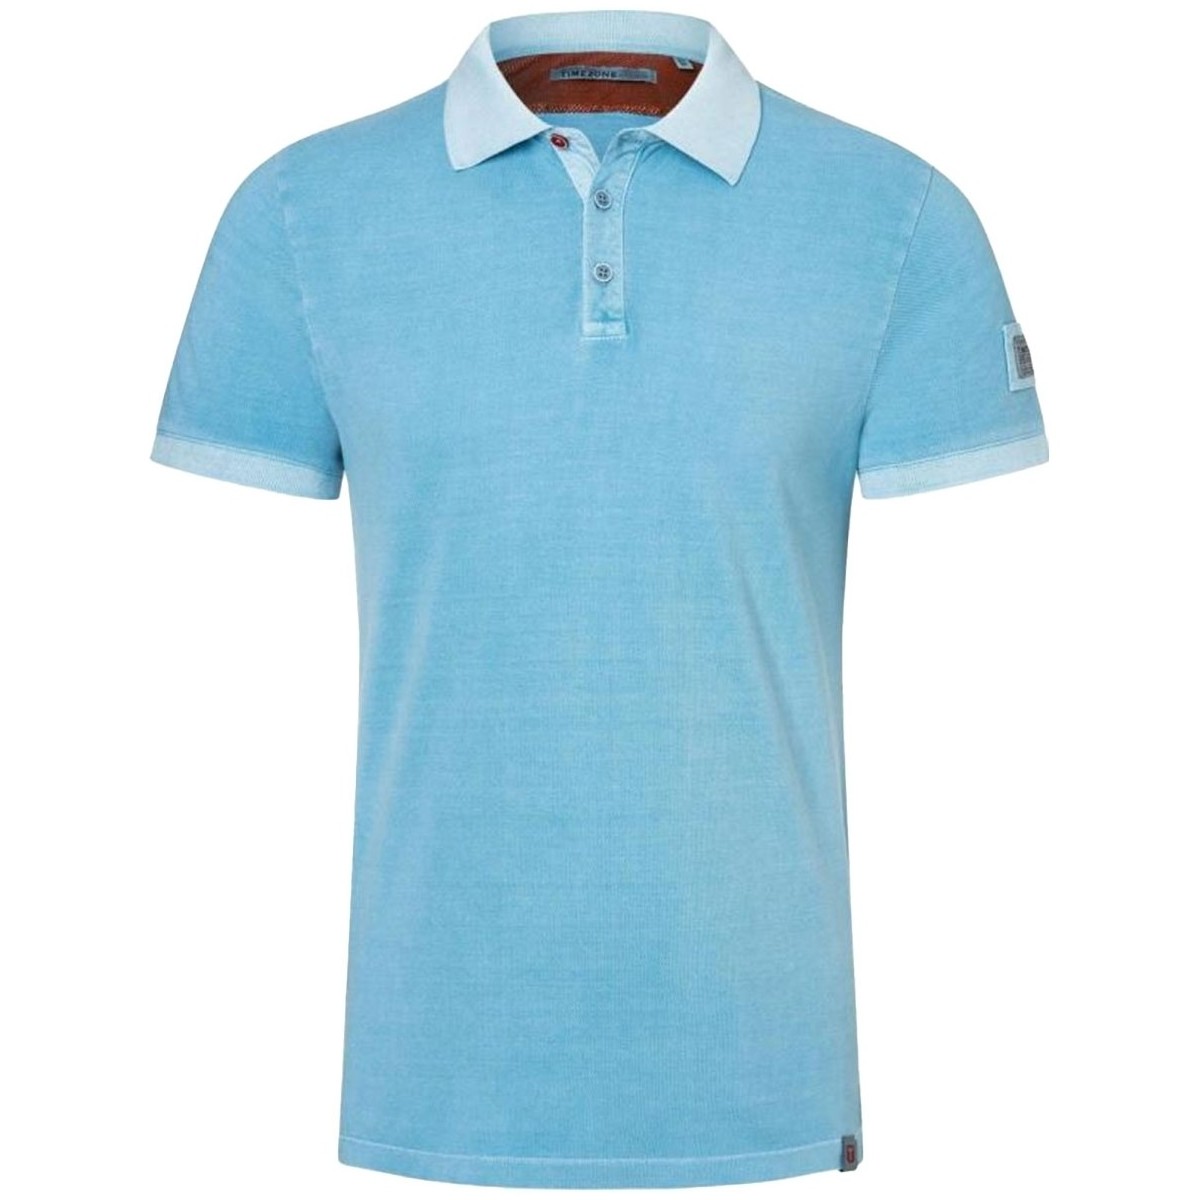 Vêtements Homme logo trim polo shirt Polo  ref 52346 bleu clair Bleu